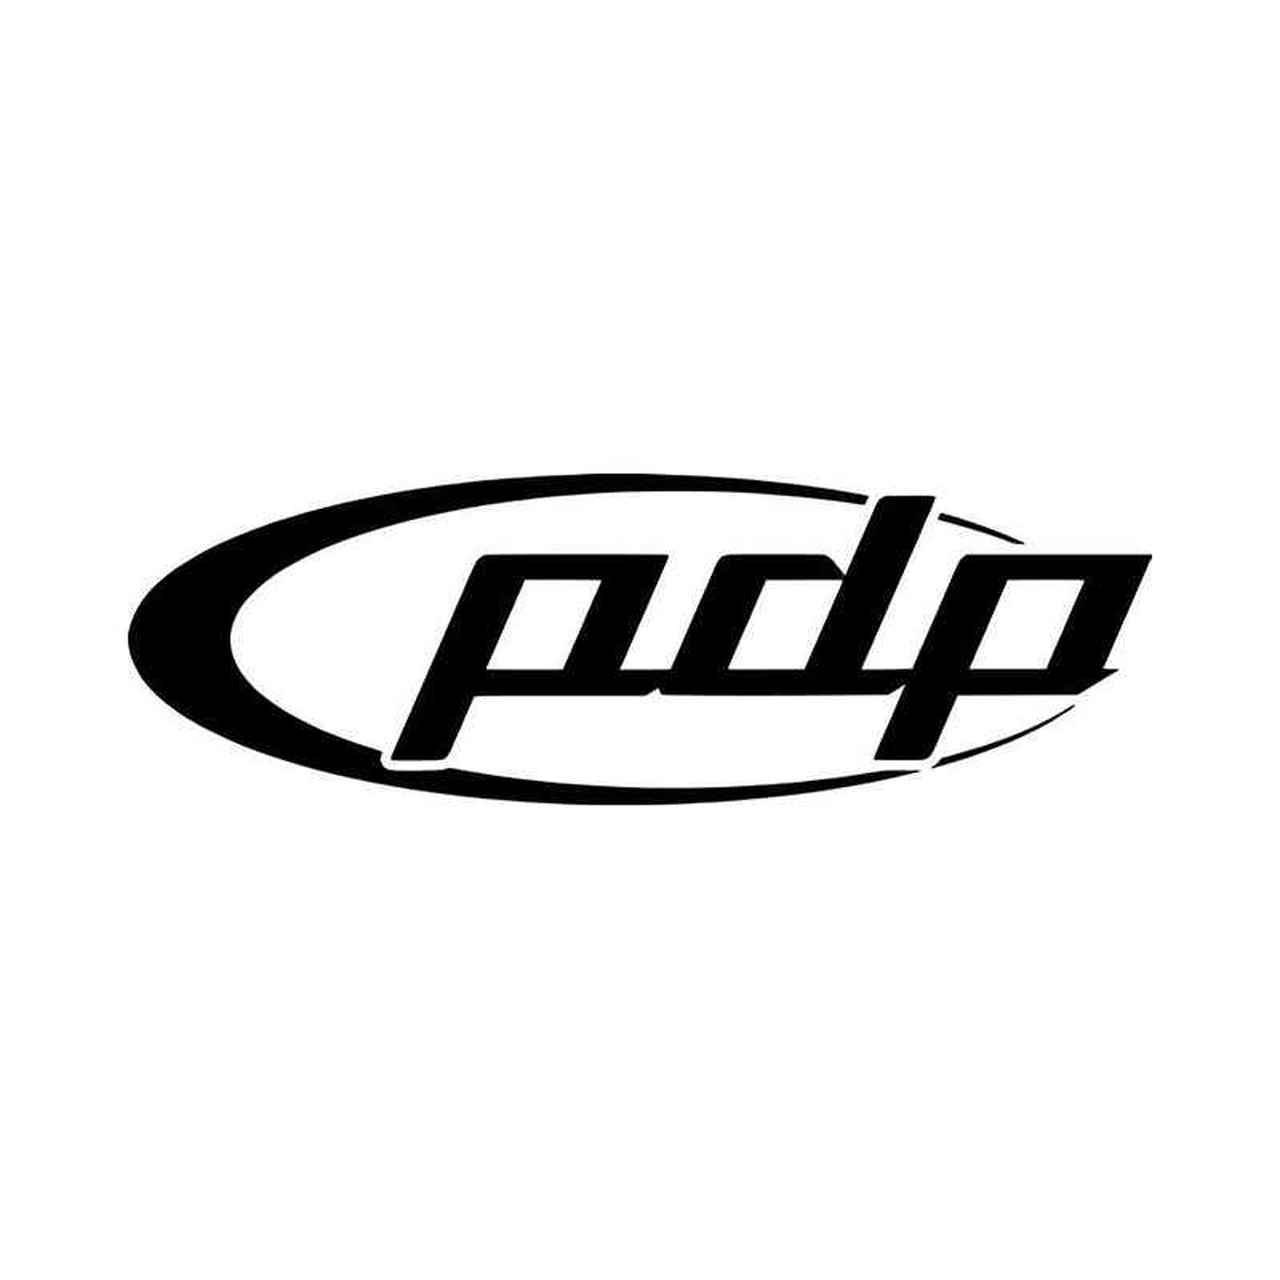 PDP Logo - Pdp Drum Logo Graphic Vinyl Decal Sticker